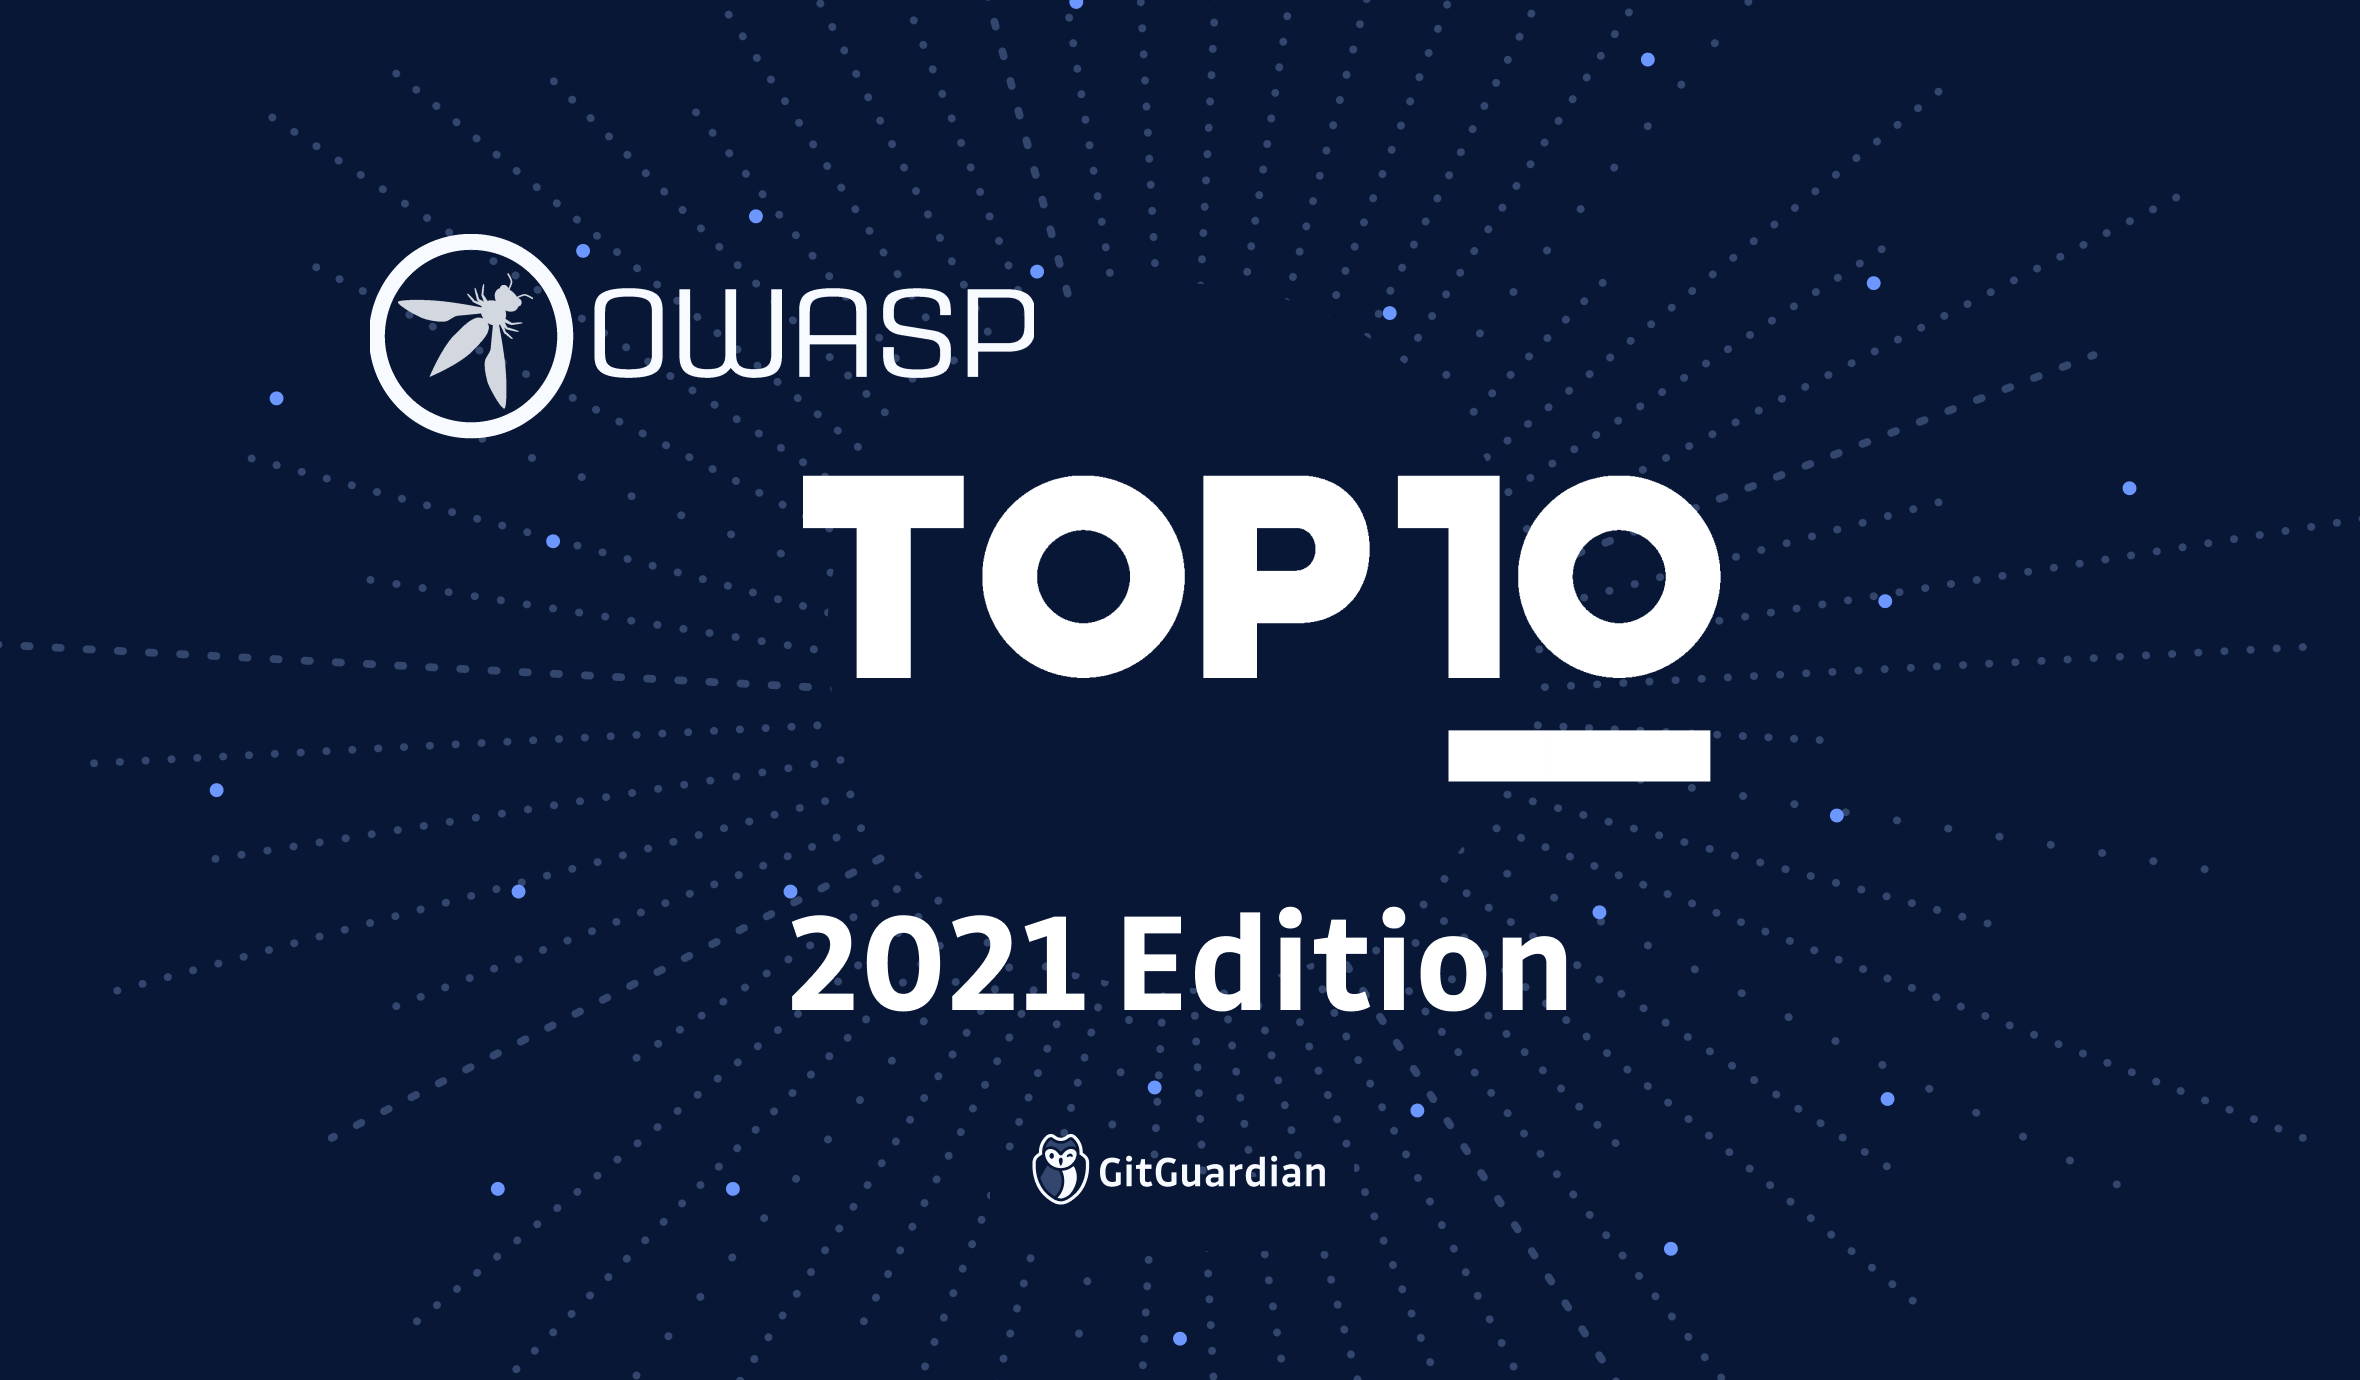 OWASP Top 10 2021 Edition